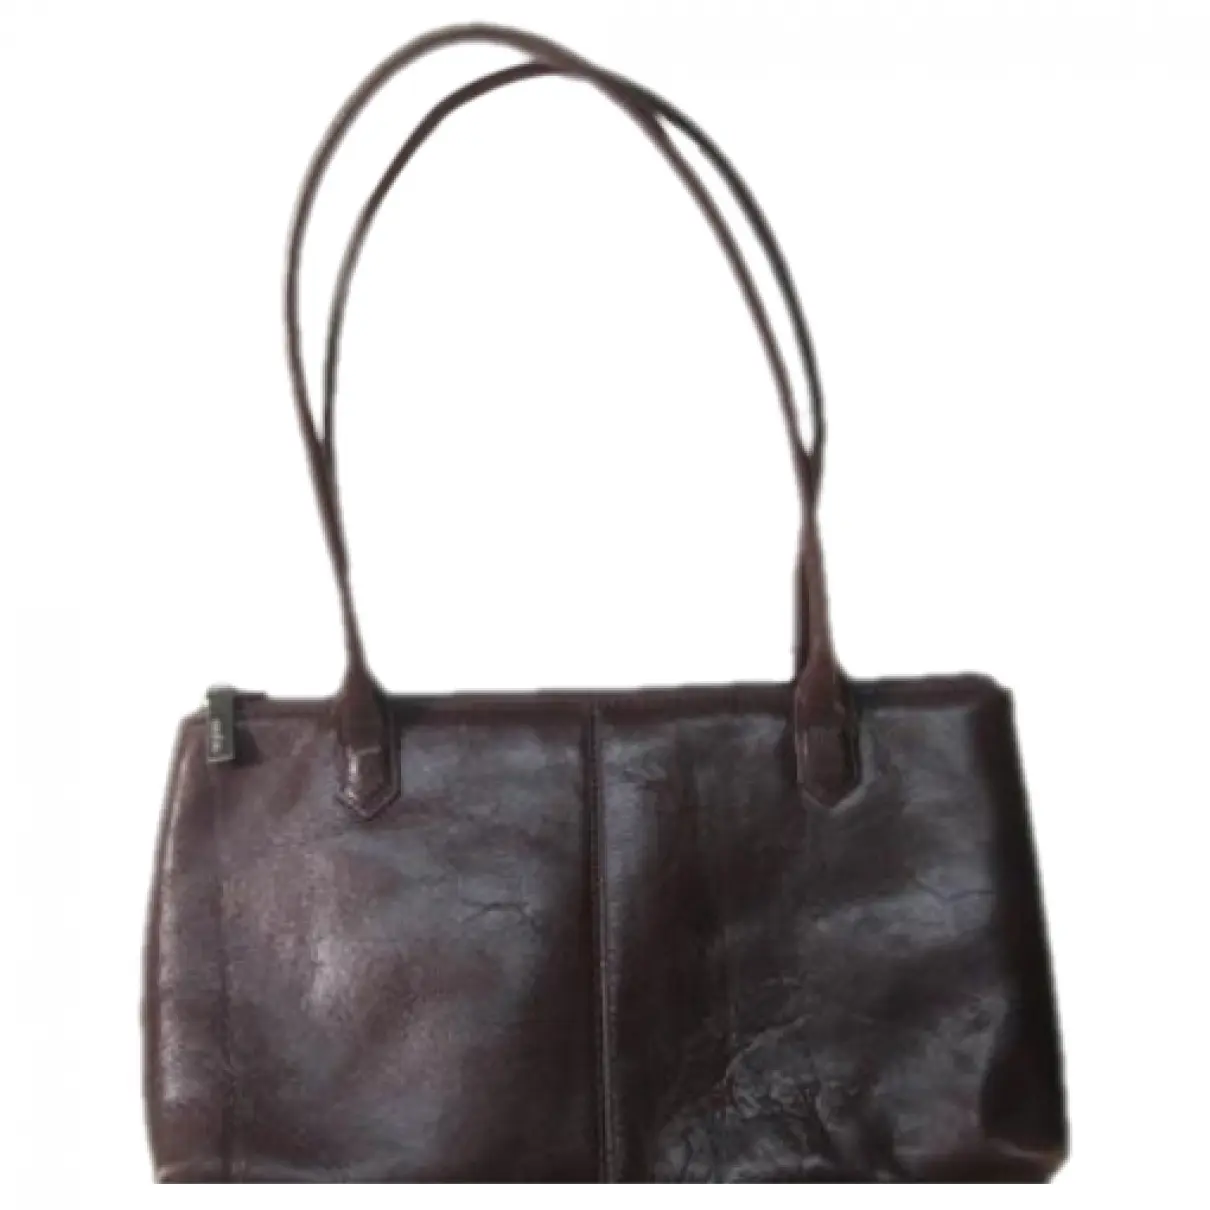 Leather handbag Hobo International